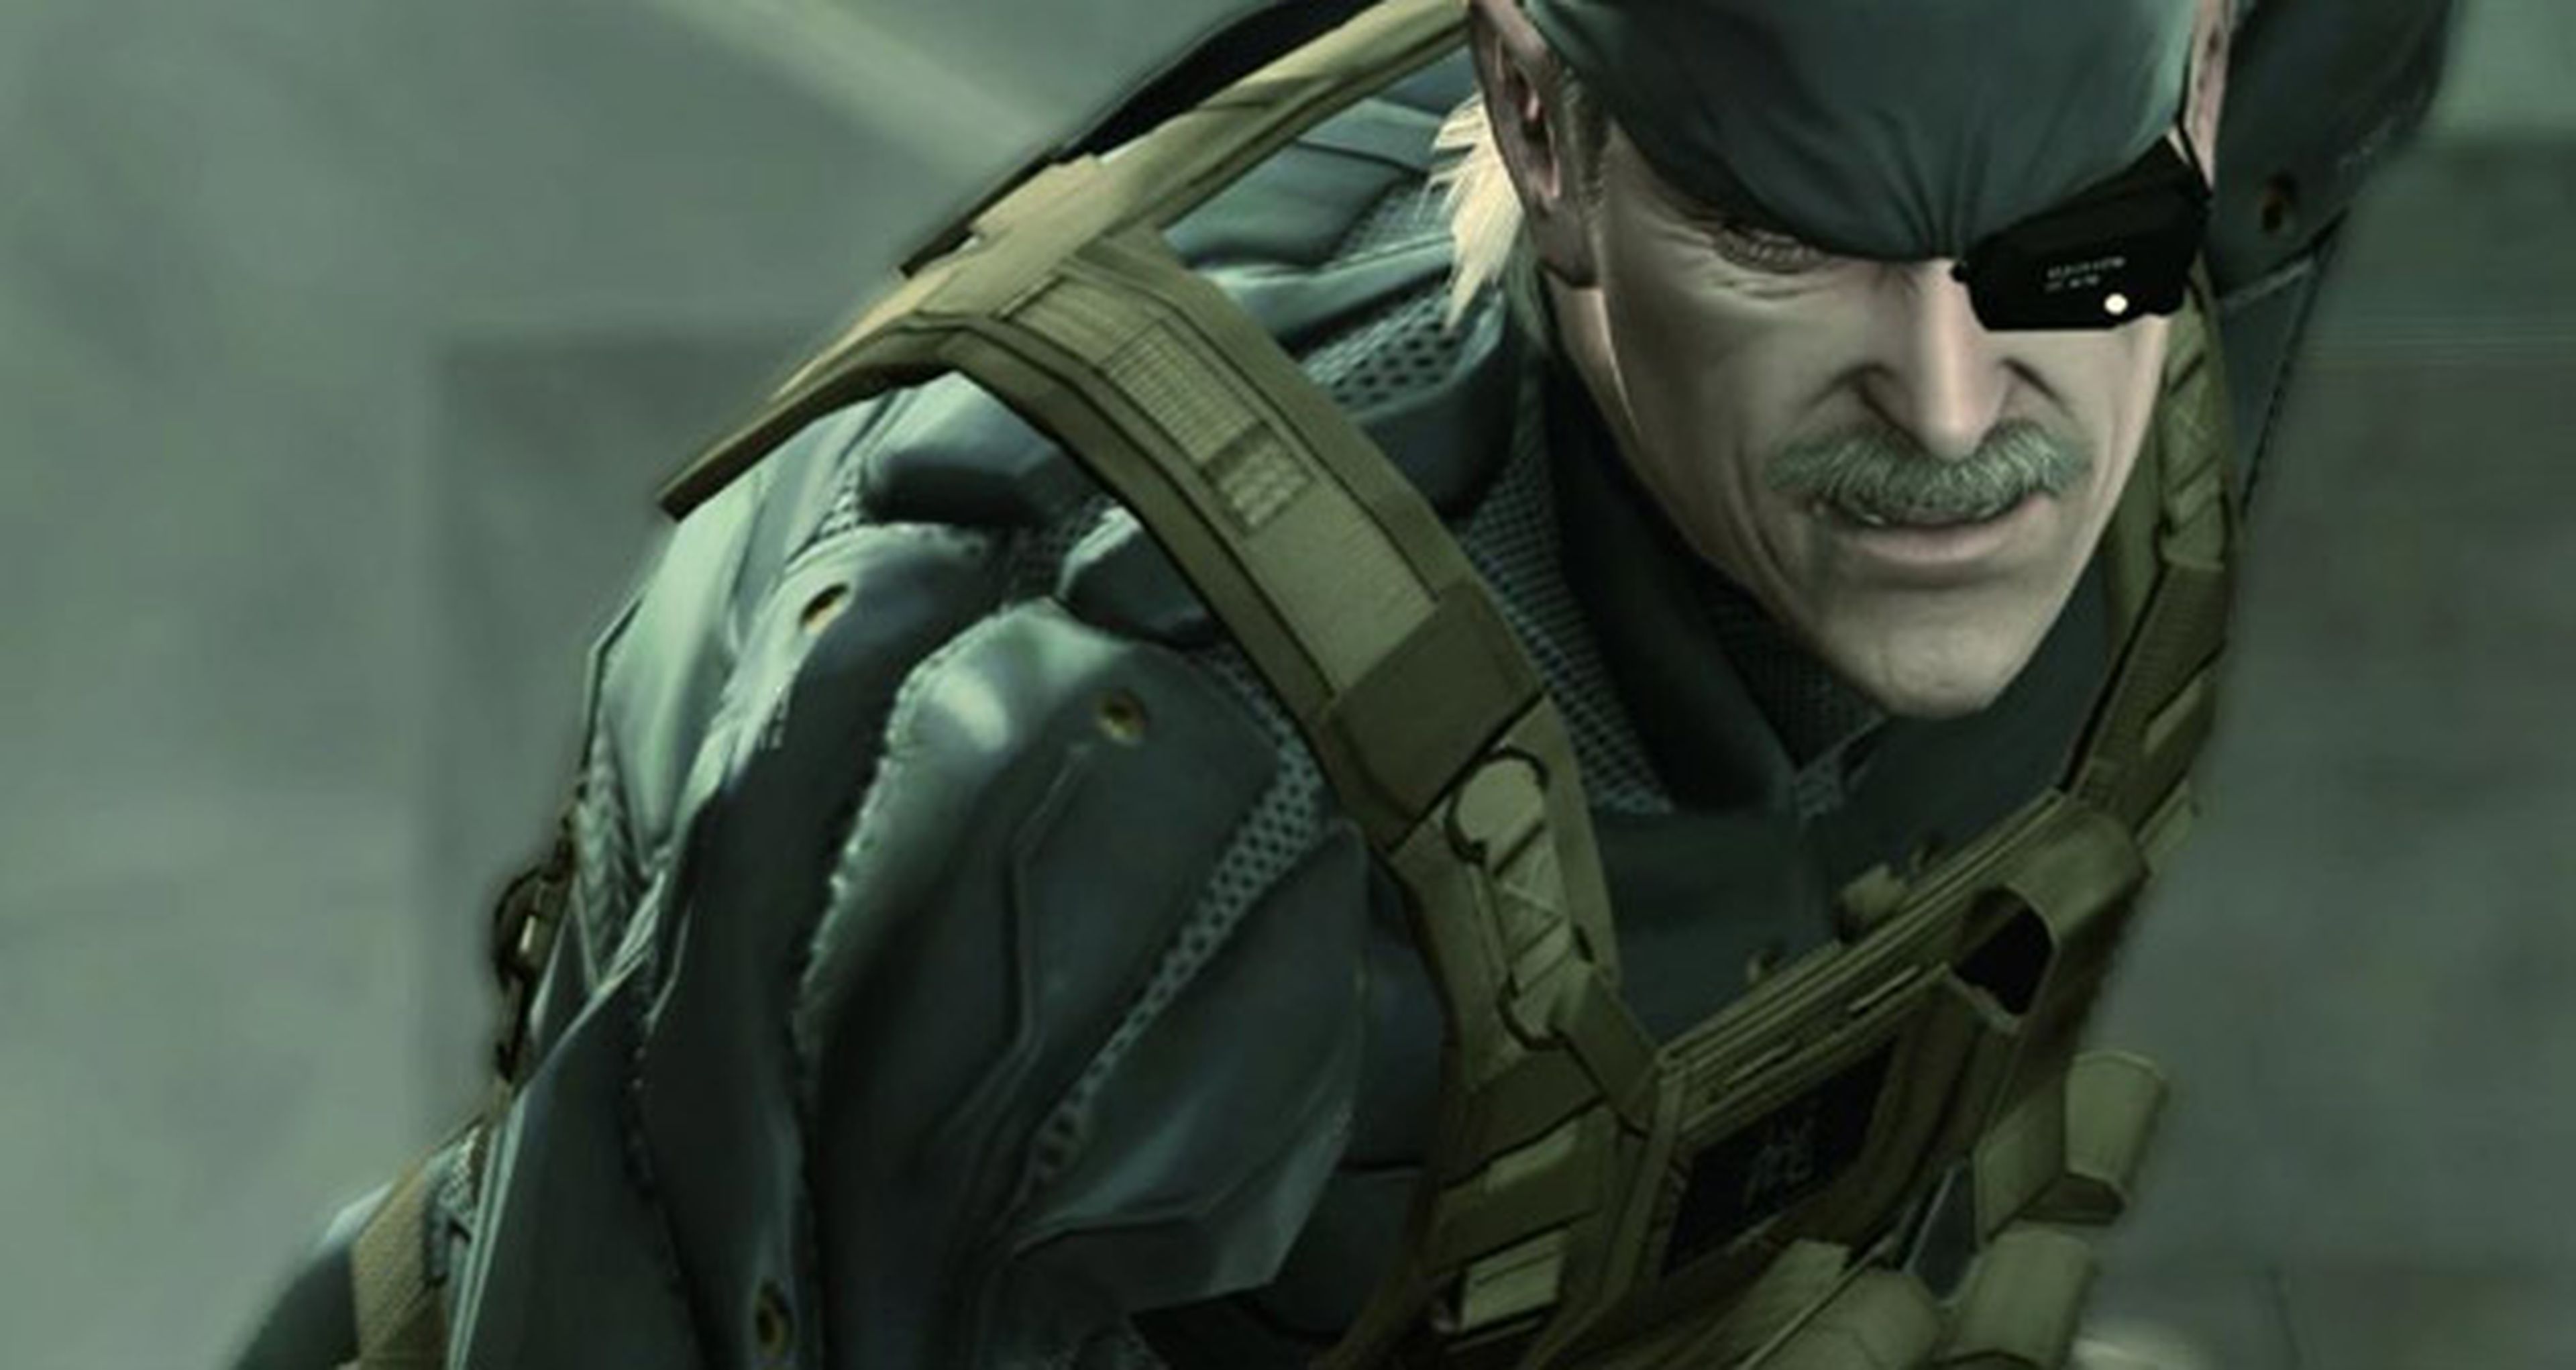 El parche de Metal Gear Solid 4 ya llega